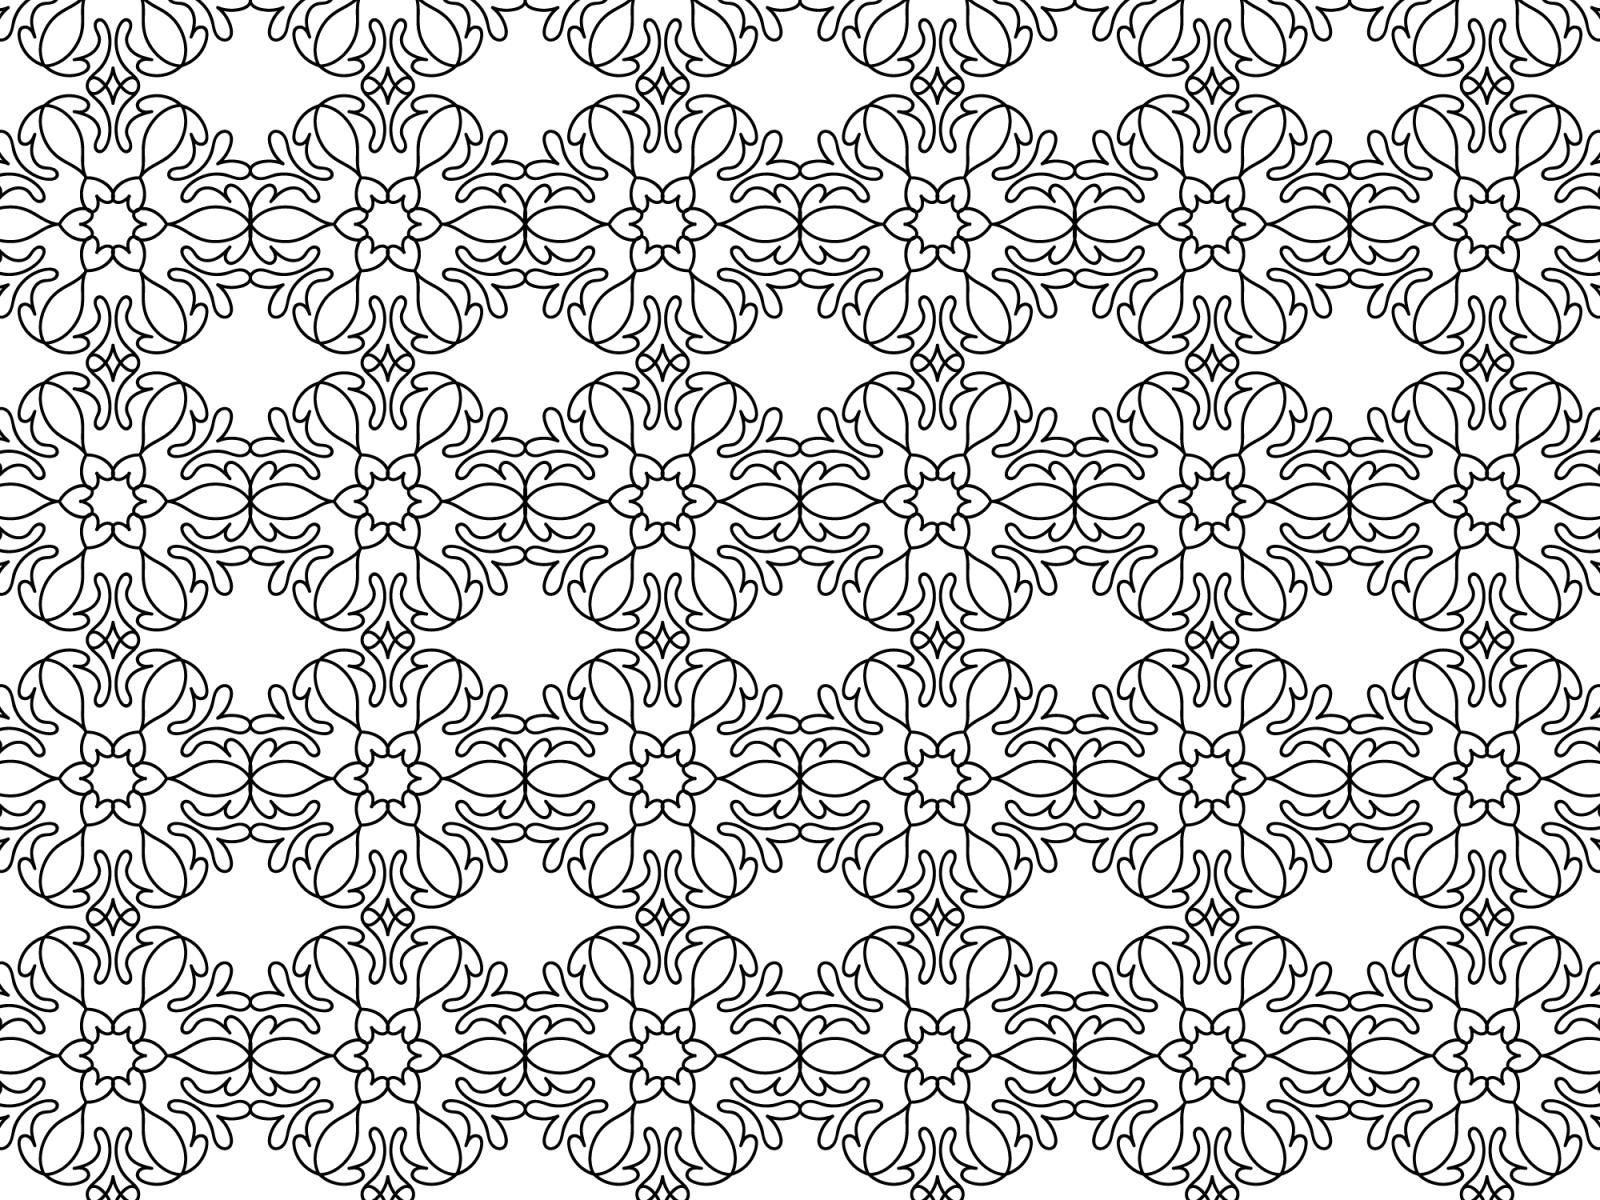 Seamless geometric pattern by mst. marufa khatun on Dribbble